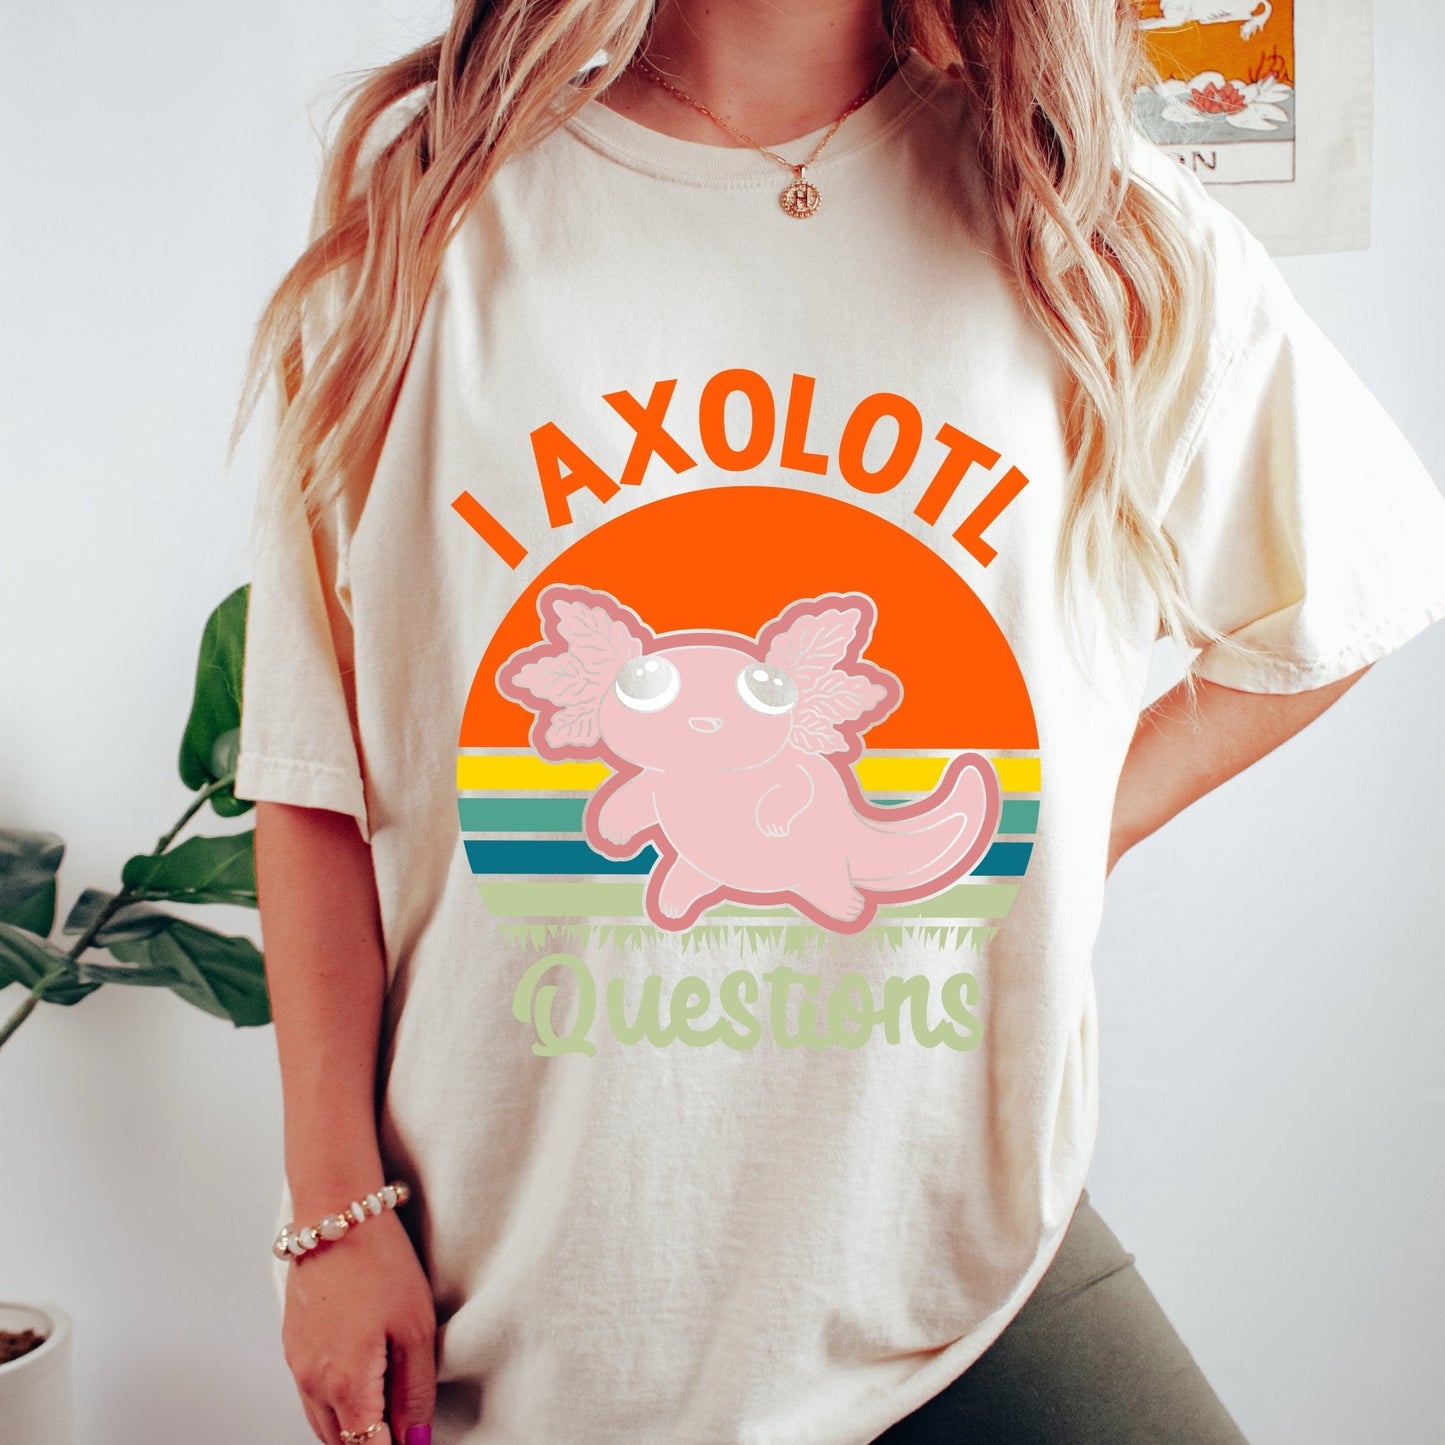 I Axolotl questions T-Shirt, Axolotl Gifts, Axolotl Shirt, Axolotl Tshirt, Axolotl Tee, Axolotl Gifts for Her, Axolotls - AFADesignsCo